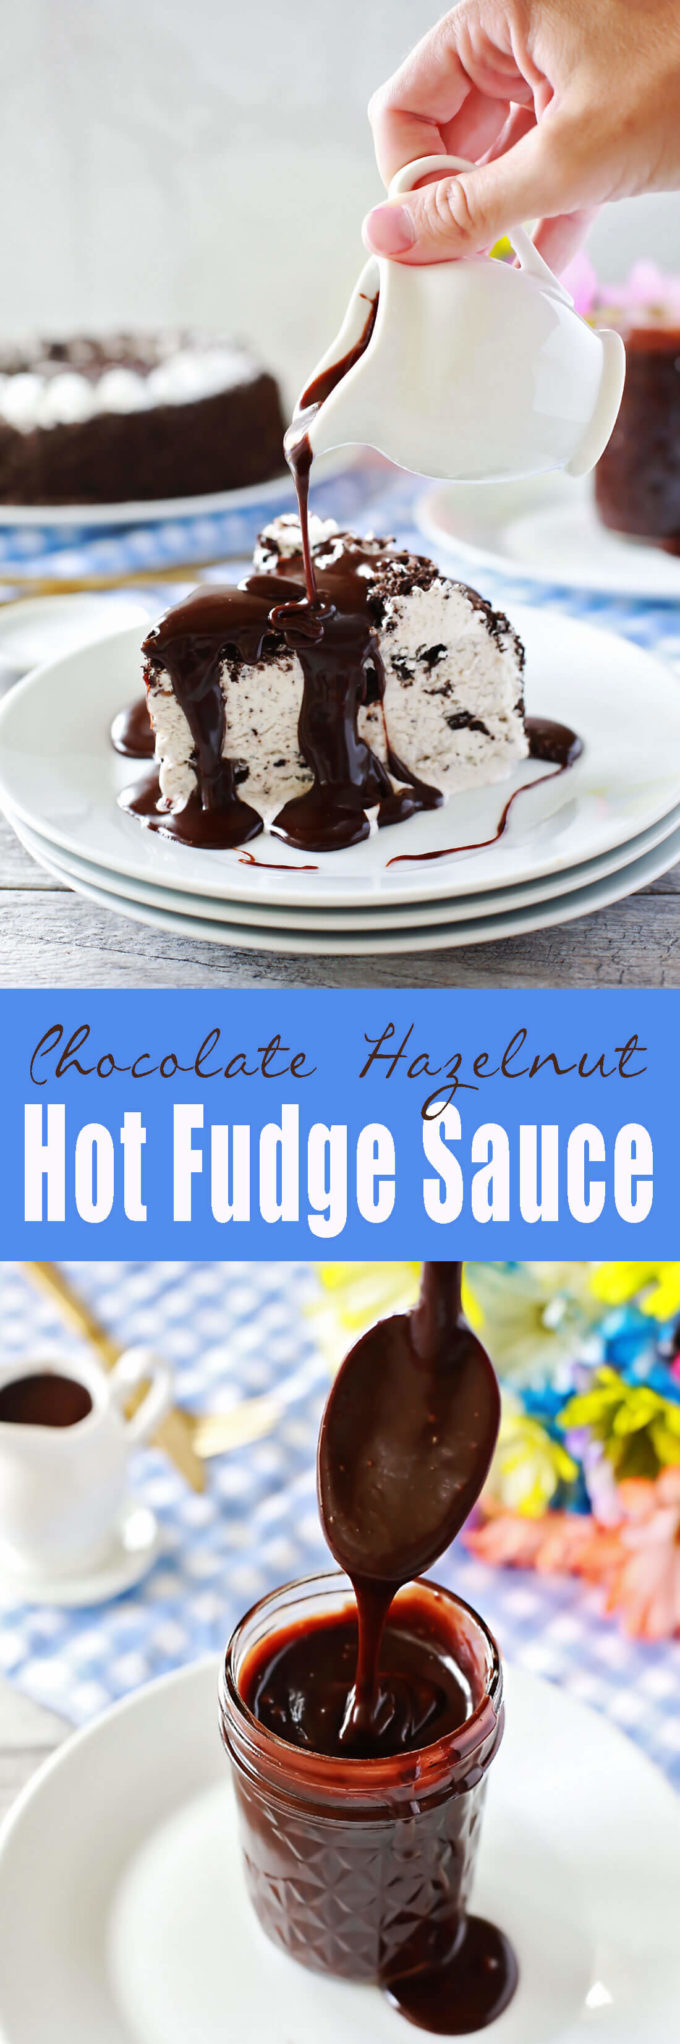 Chocolate Hazelnut Hot fudge sauce